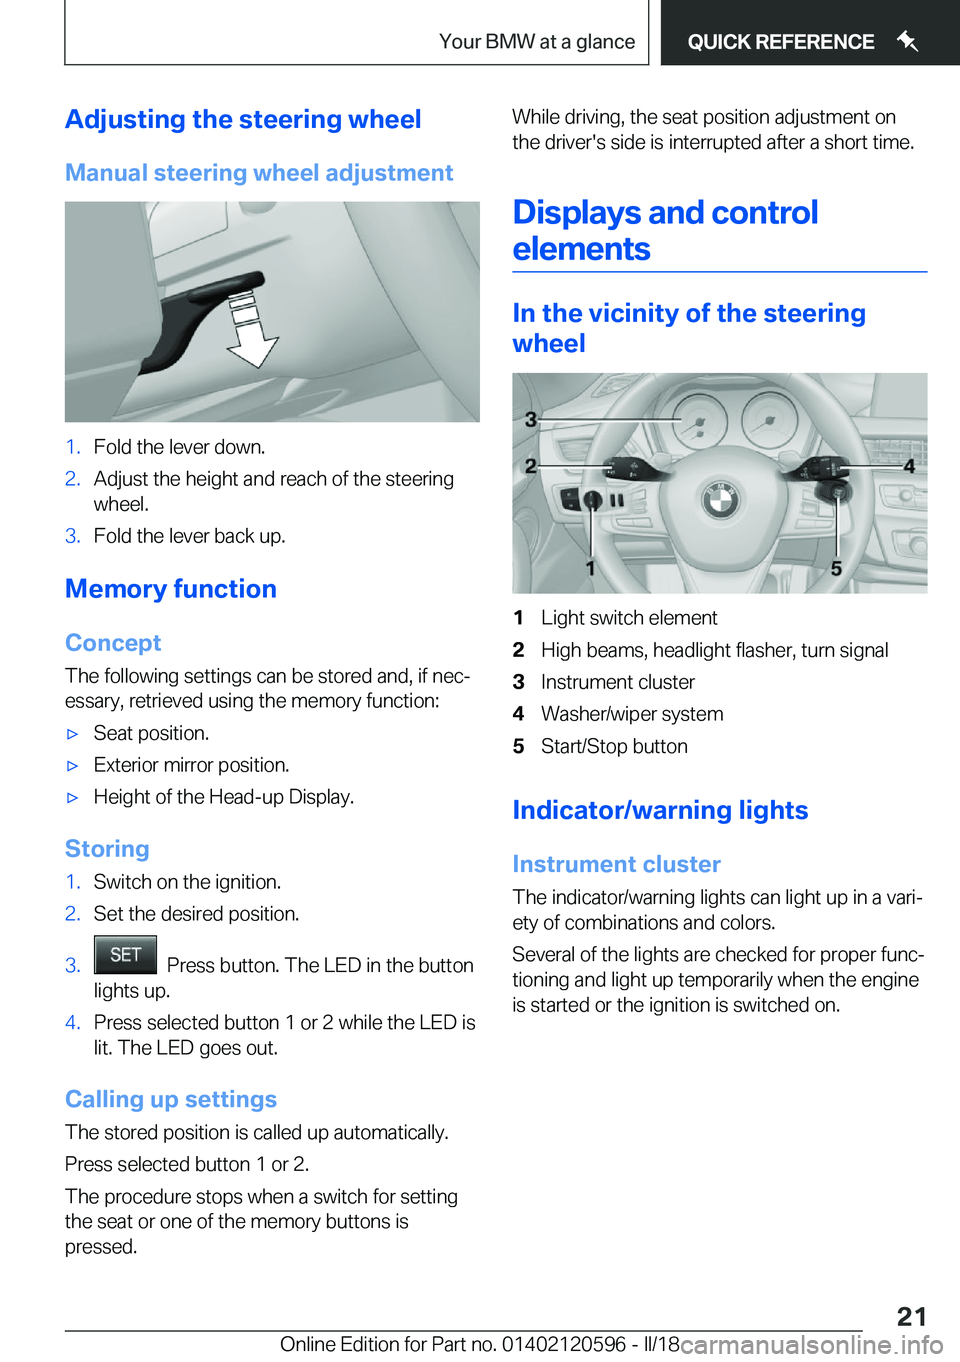 BMW X1 2018 Owners Manual �A�d�j�u�s�t�i�n�g��t�h�e��s�t�e�e�r�i�n�g��w�h�e�e�l
�M�a�n�u�a�l��s�t�e�e�r�i�n�g��w�h�e�e�l��a�d�j�u�s�t�m�e�n�t�1�.�F�o�l�d� �t�h�e� �l�e�v�e�r� �d�o�w�n�.�2�.�A�d�j�u�s�t� �t�h�e� �h�e�i�g�